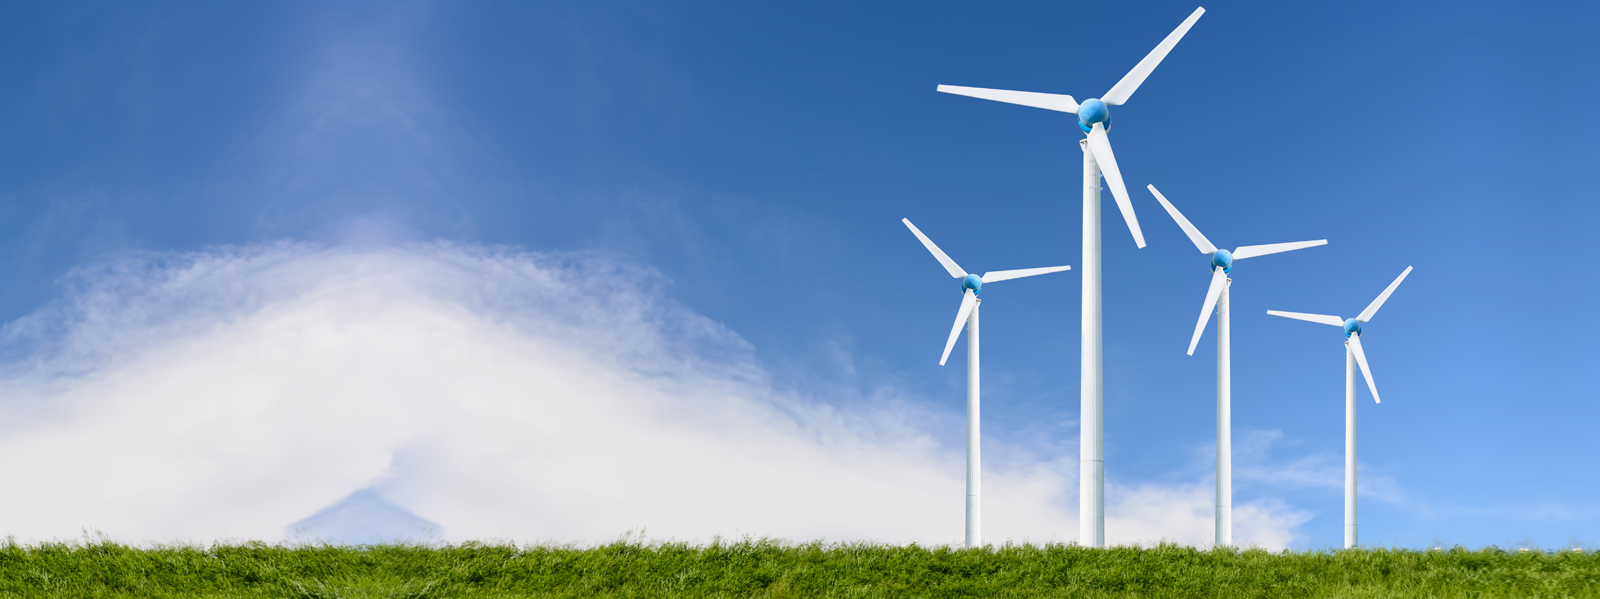 Hitachi Wind Turbine Energy Forecast for Green Energy Production